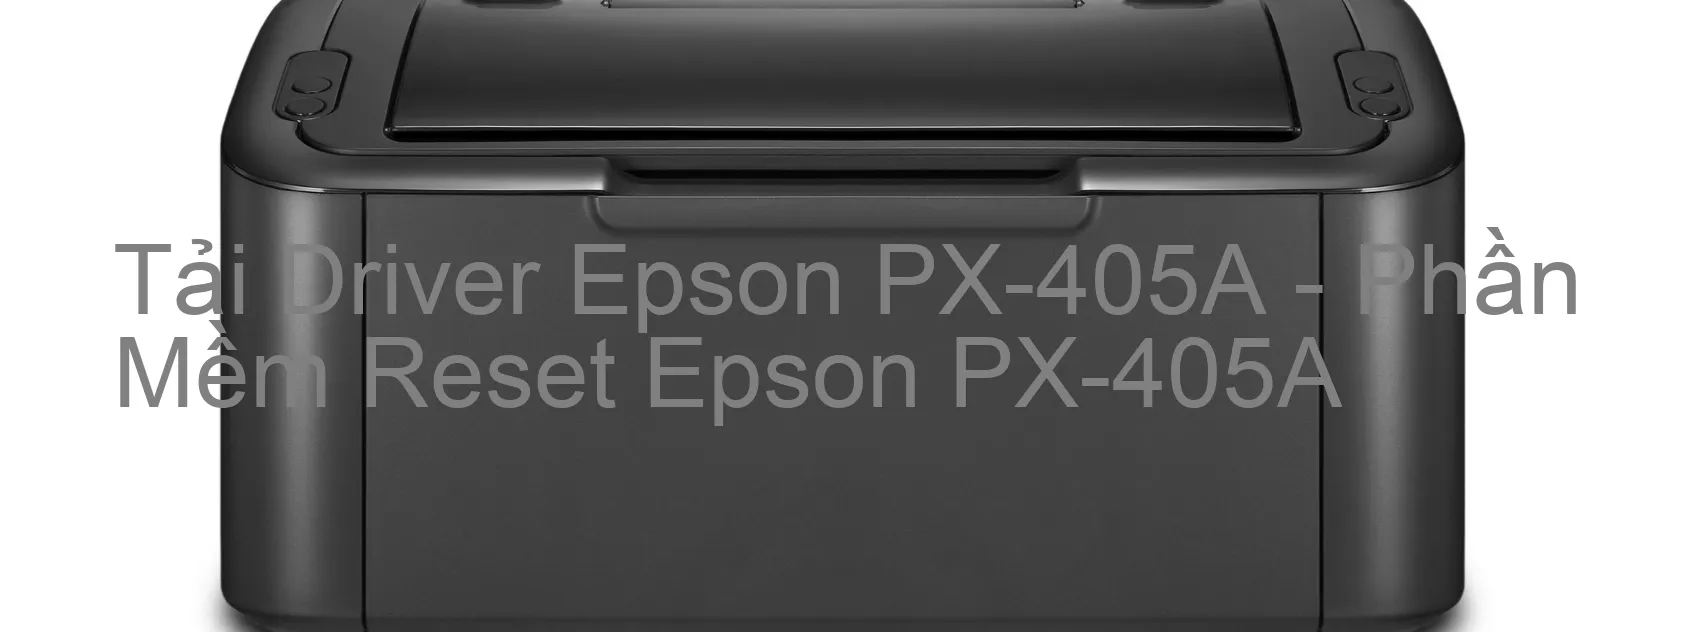 Driver Epson PX-405A, Phần Mềm Reset Epson PX-405A